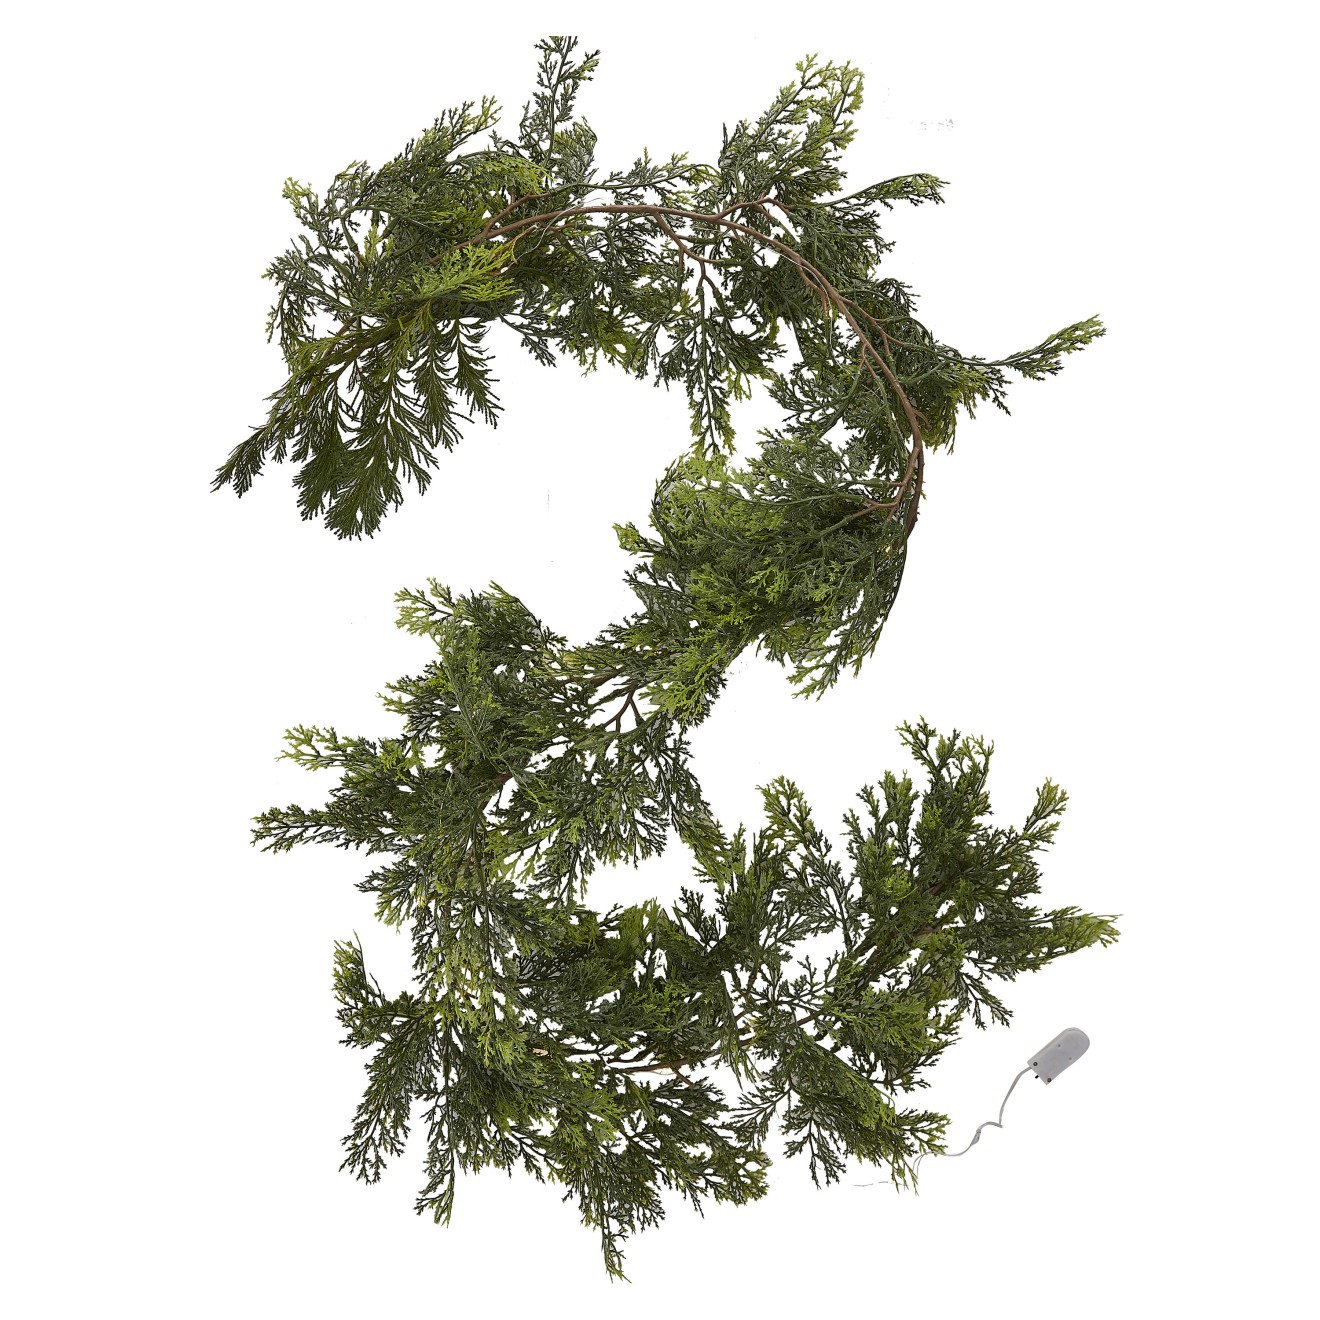 1 Oversized Evergreen Garland - Cedar foliage with lights